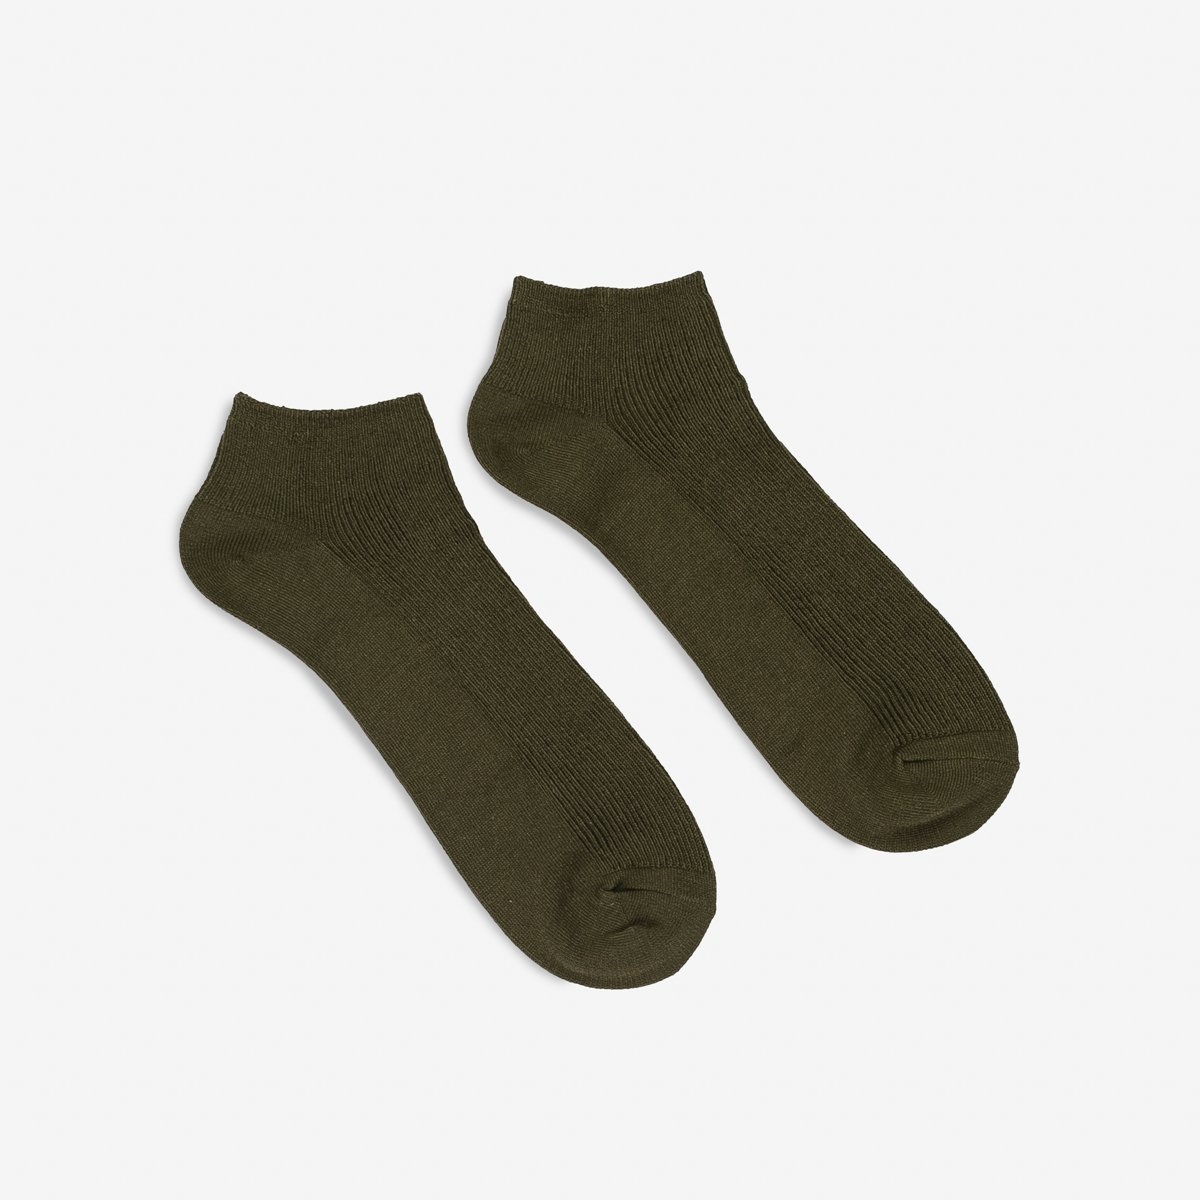 UTSS-KHA UTILITEES Mixed Cotton Sneaker Socks - Khaki - 1